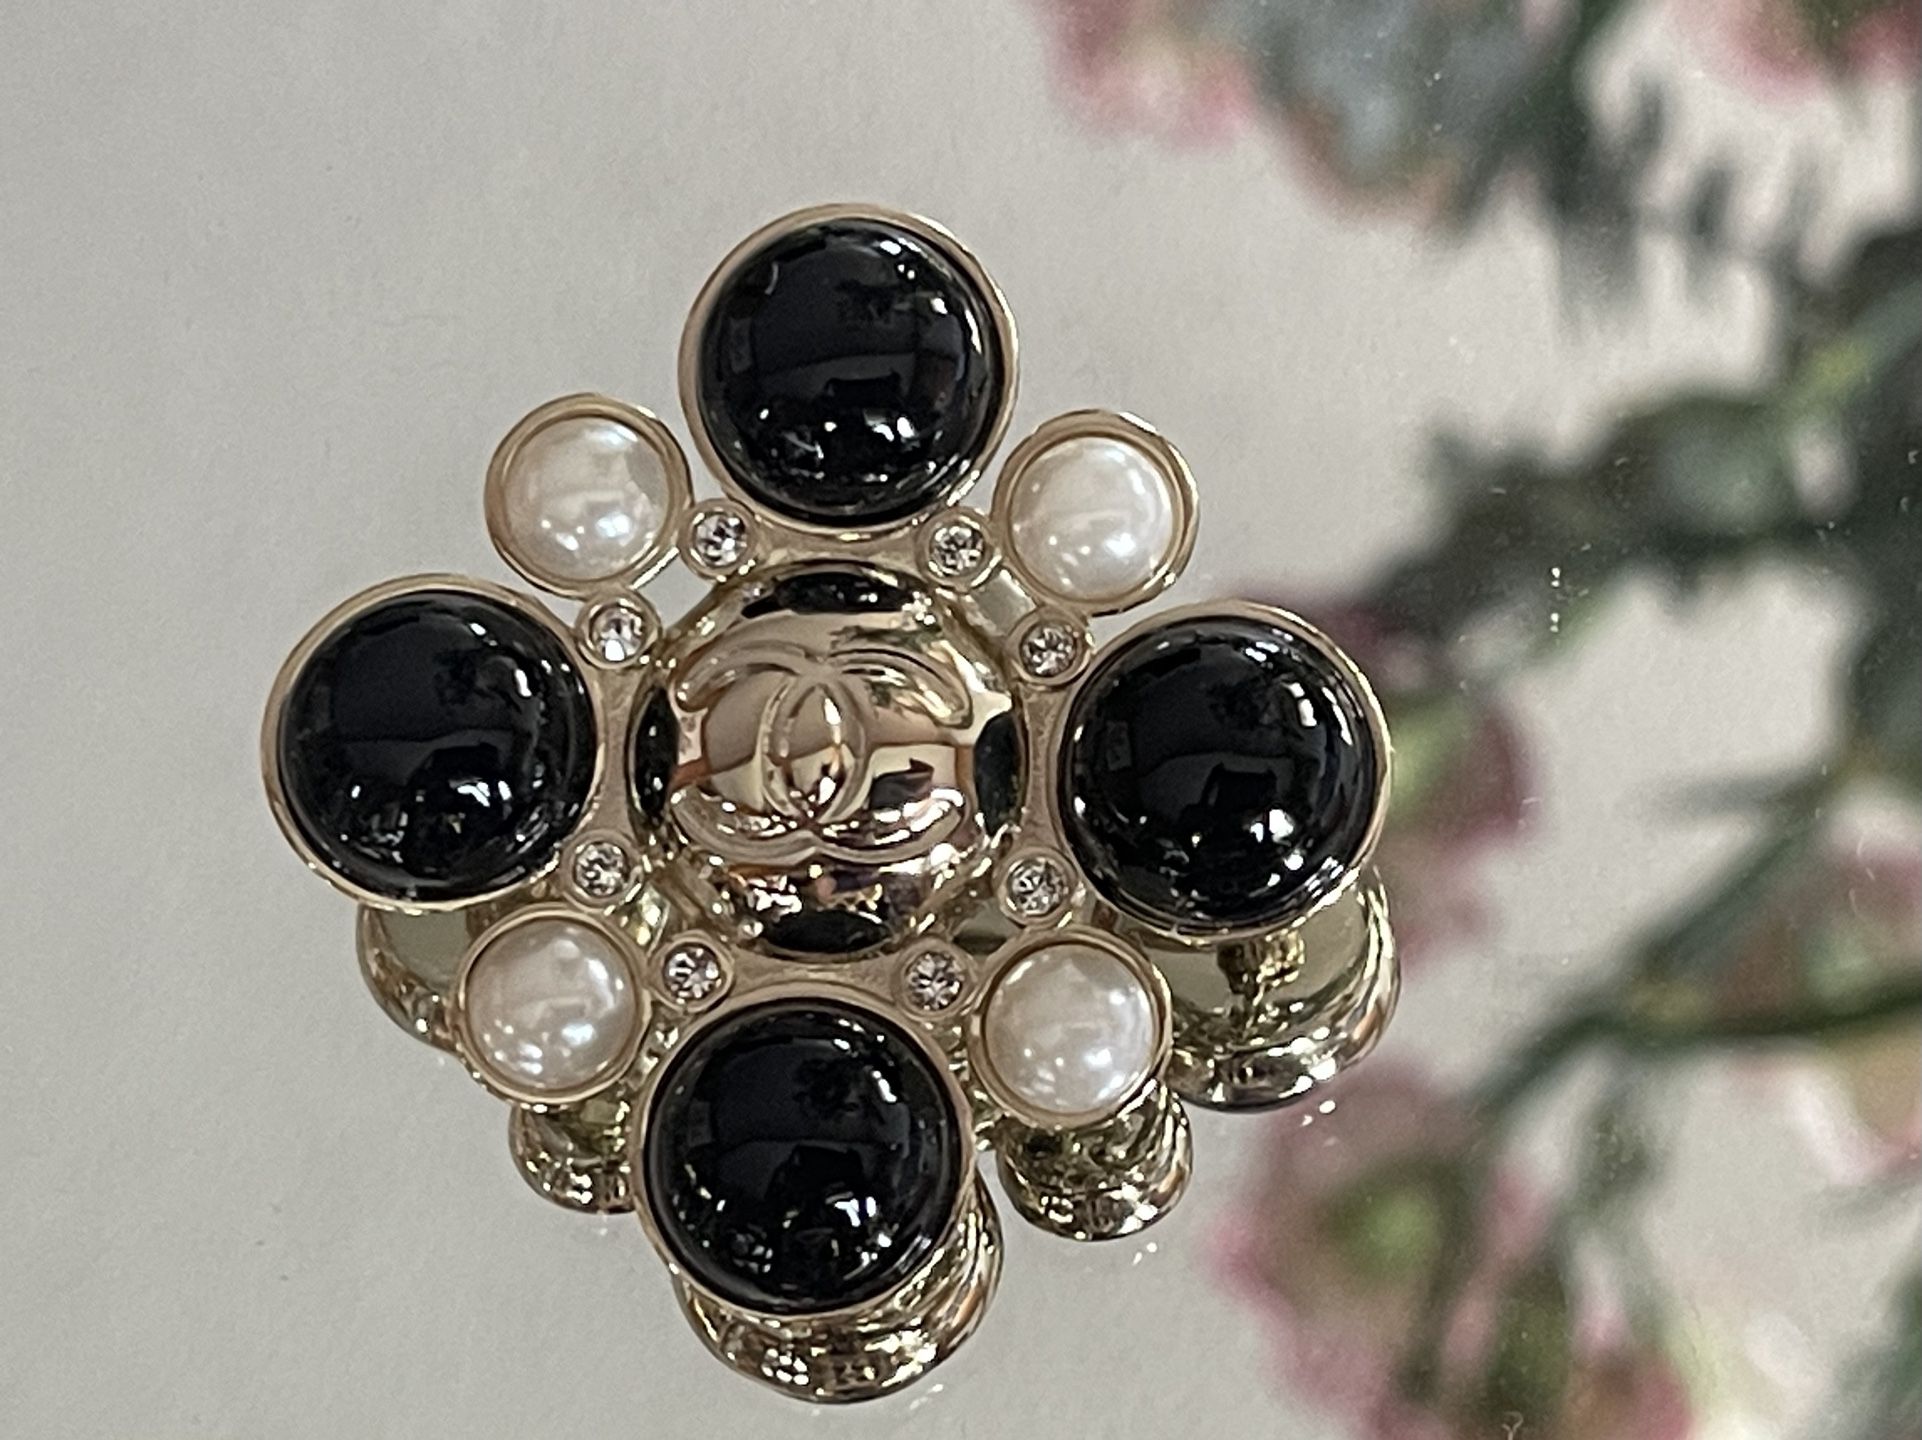 vintage chanel pearl brooch pin